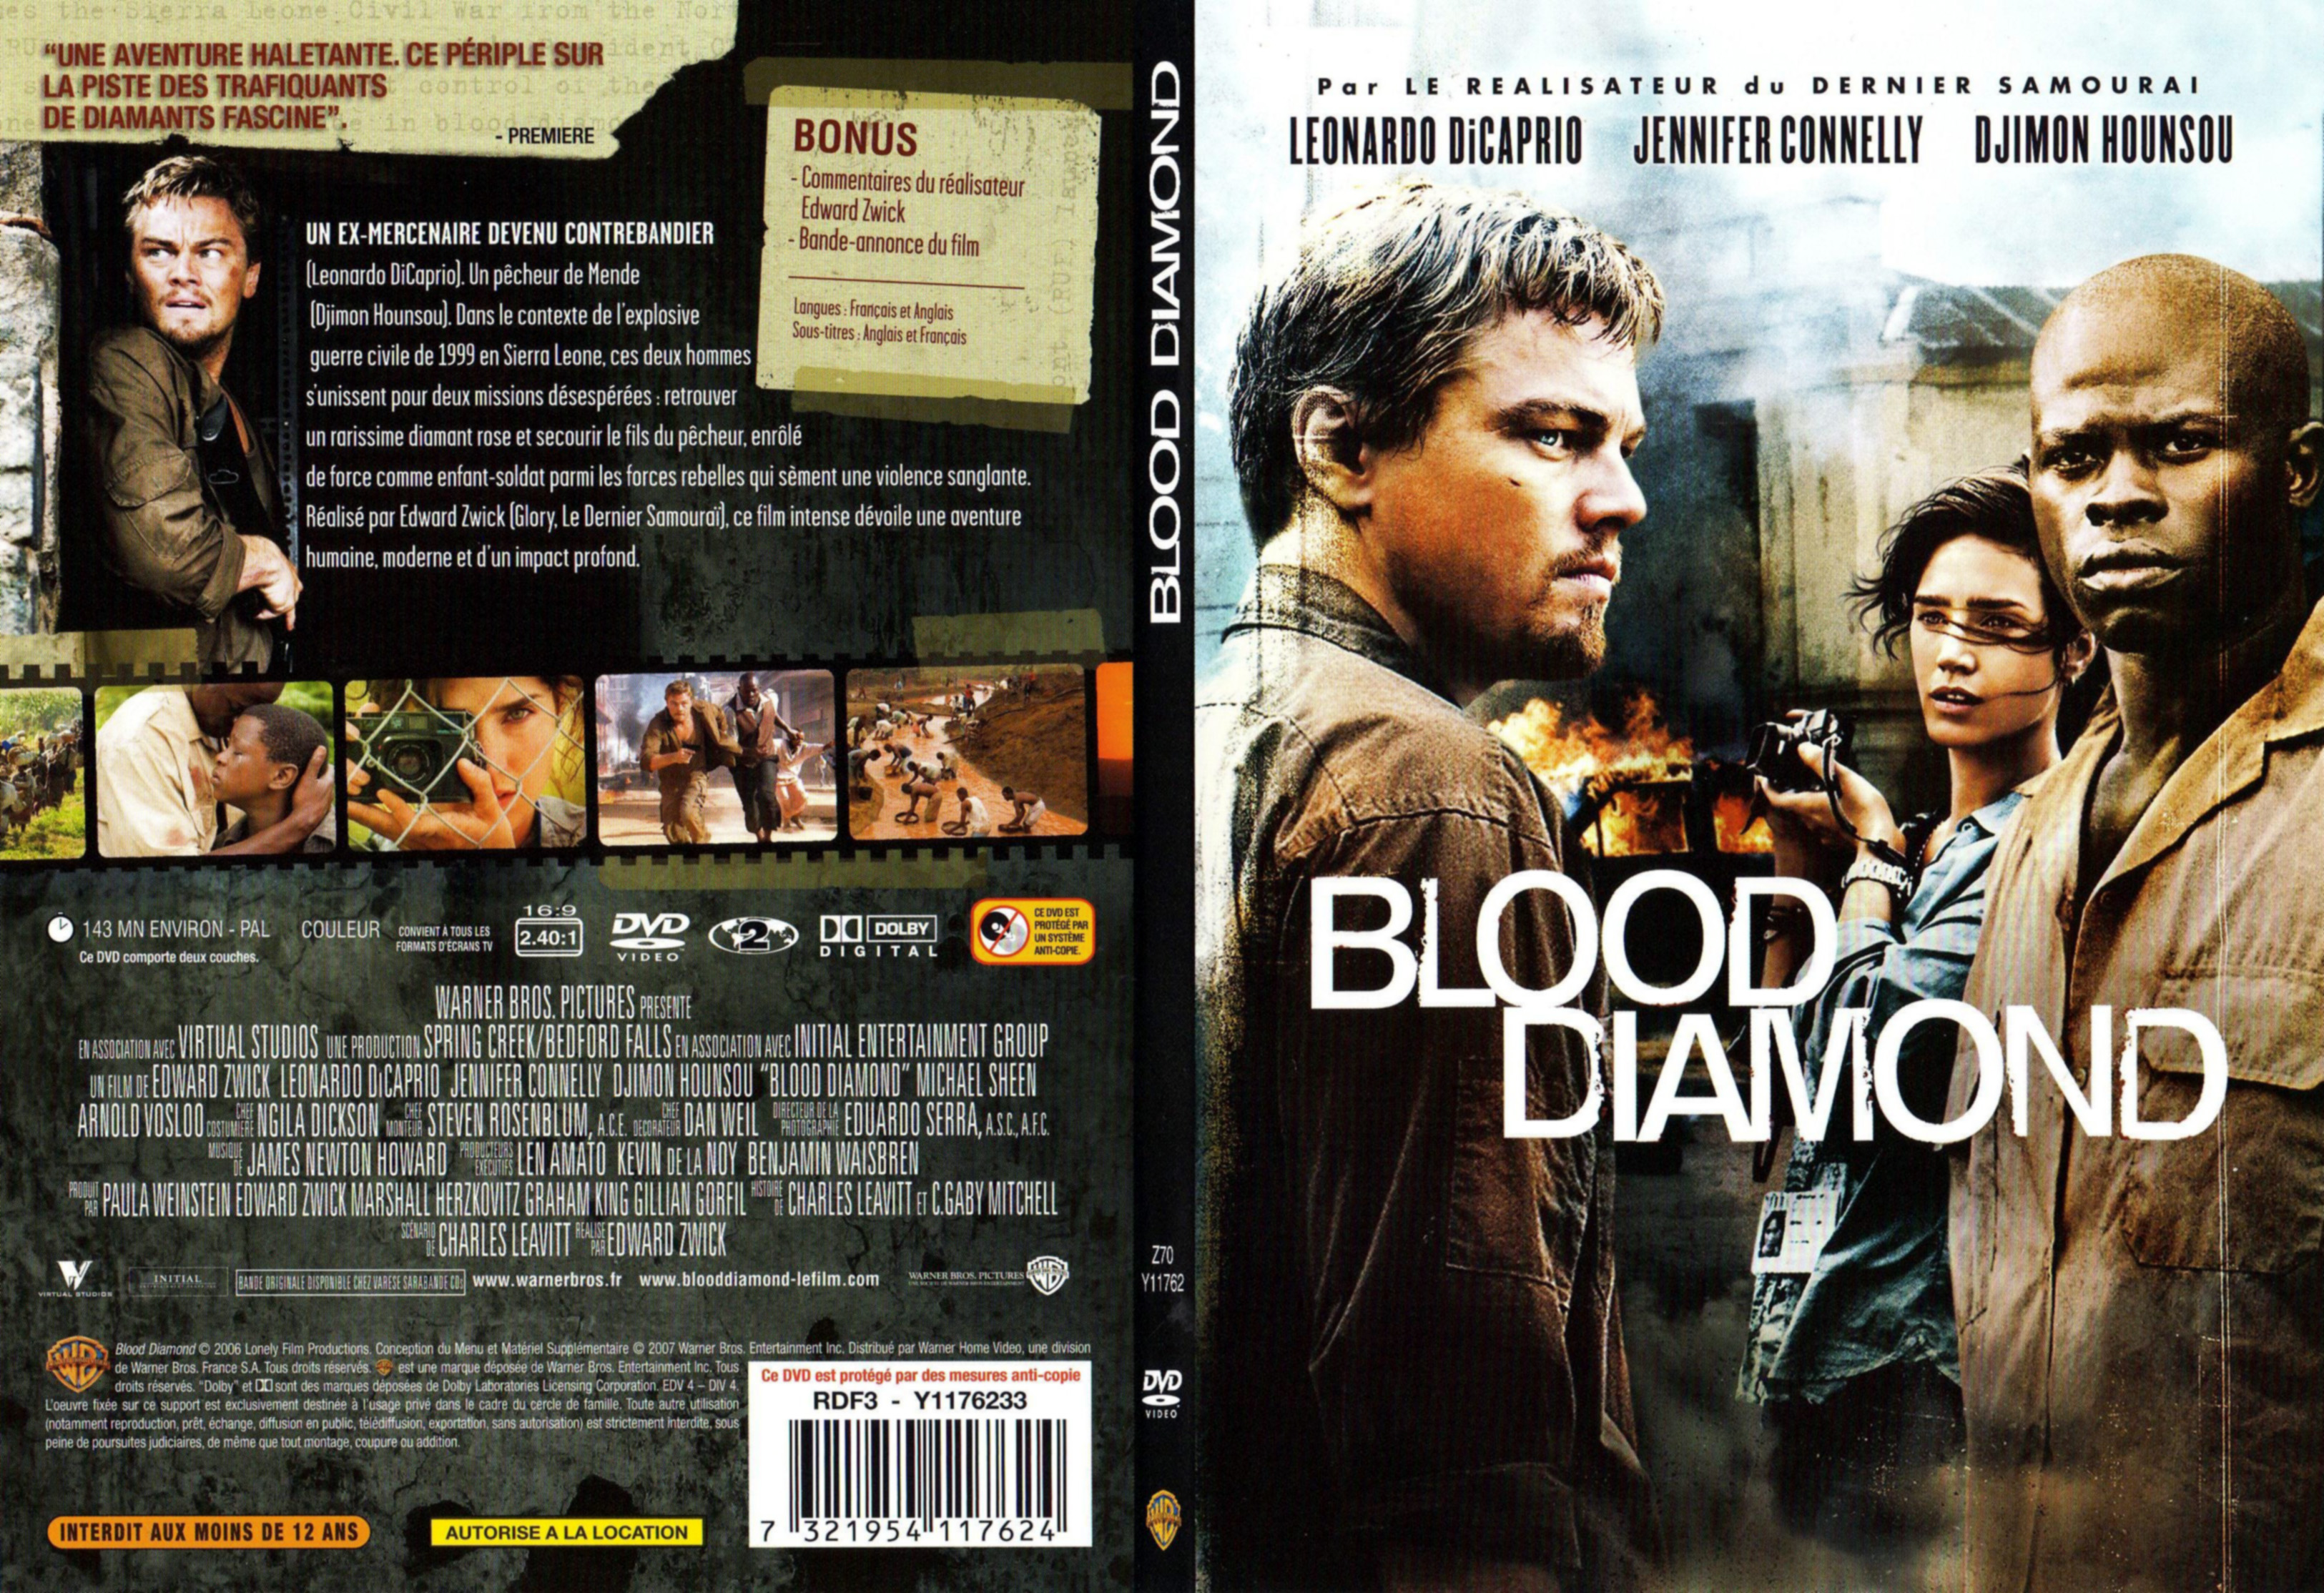 Jaquette DVD Blood diamond - SLIM